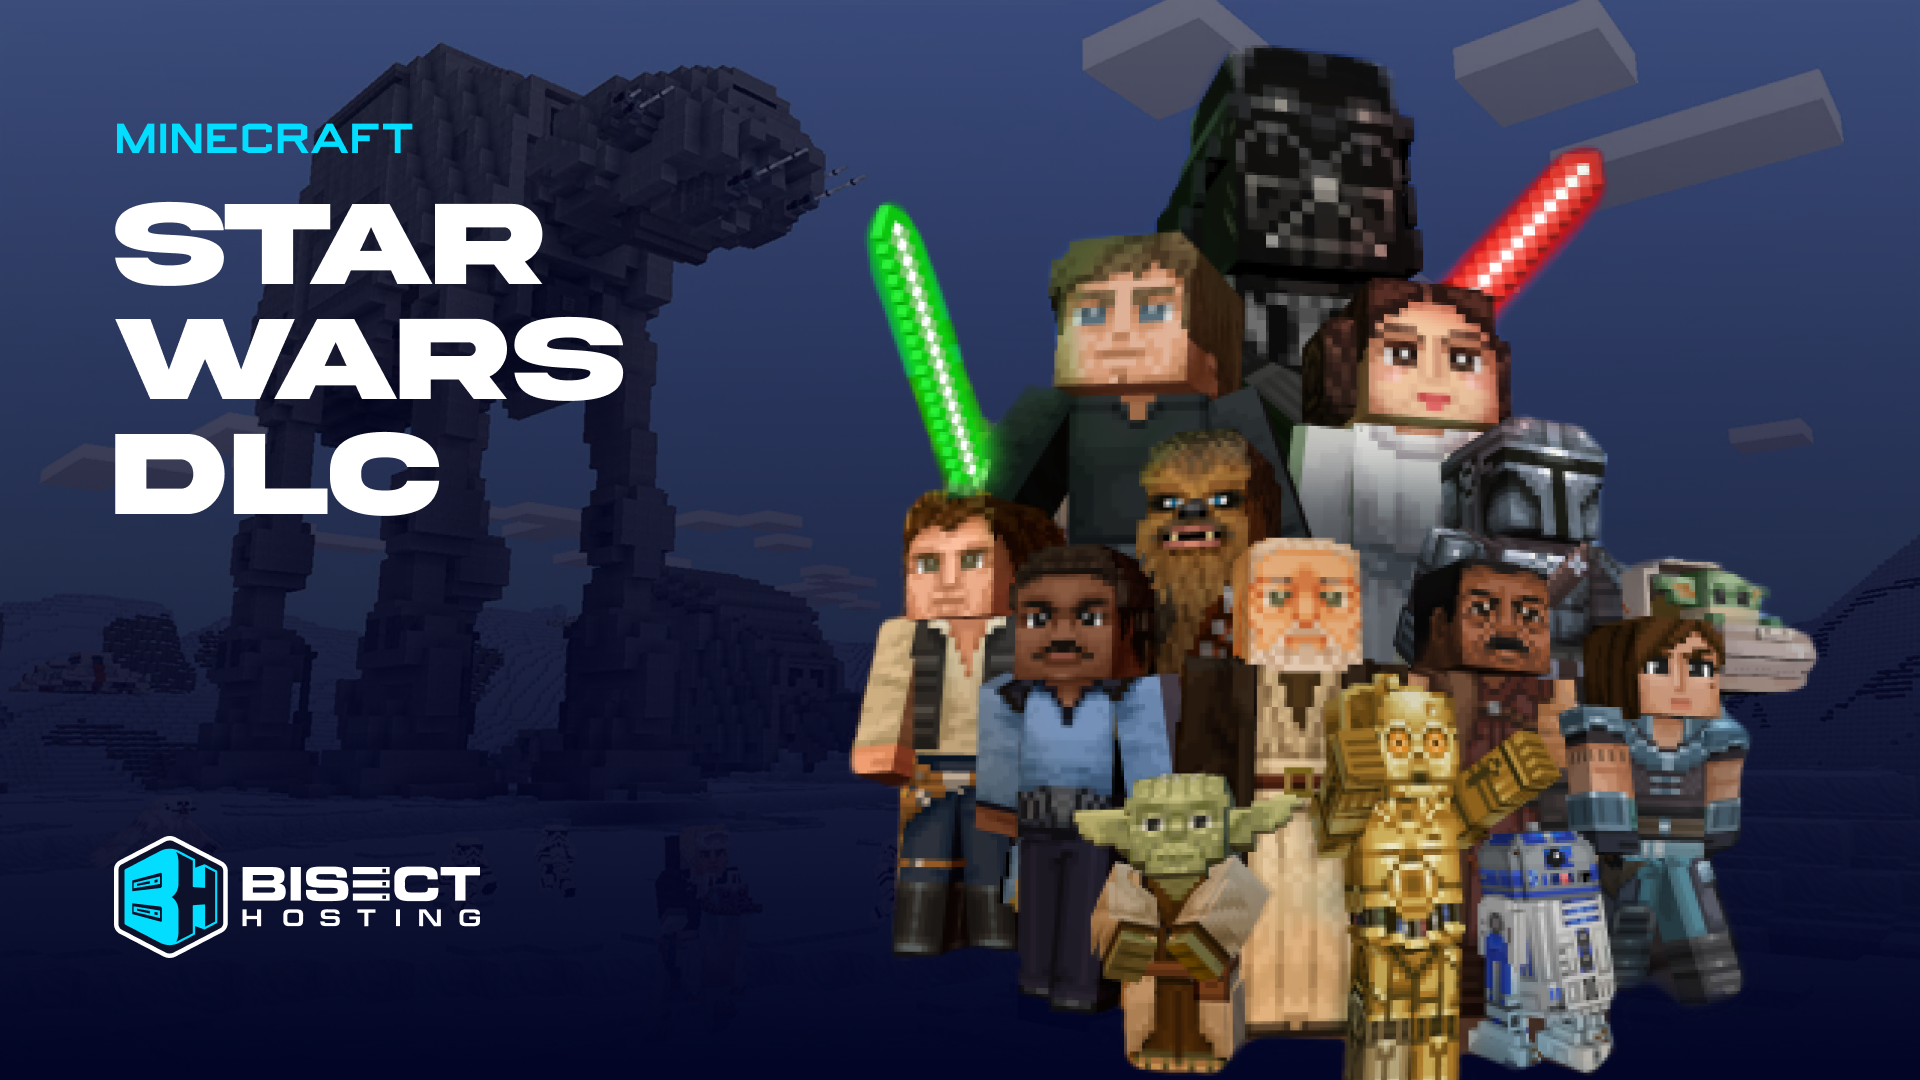 Minecraft Star Wars DLC: Six Days of Star Wars Event Deals & Discounts